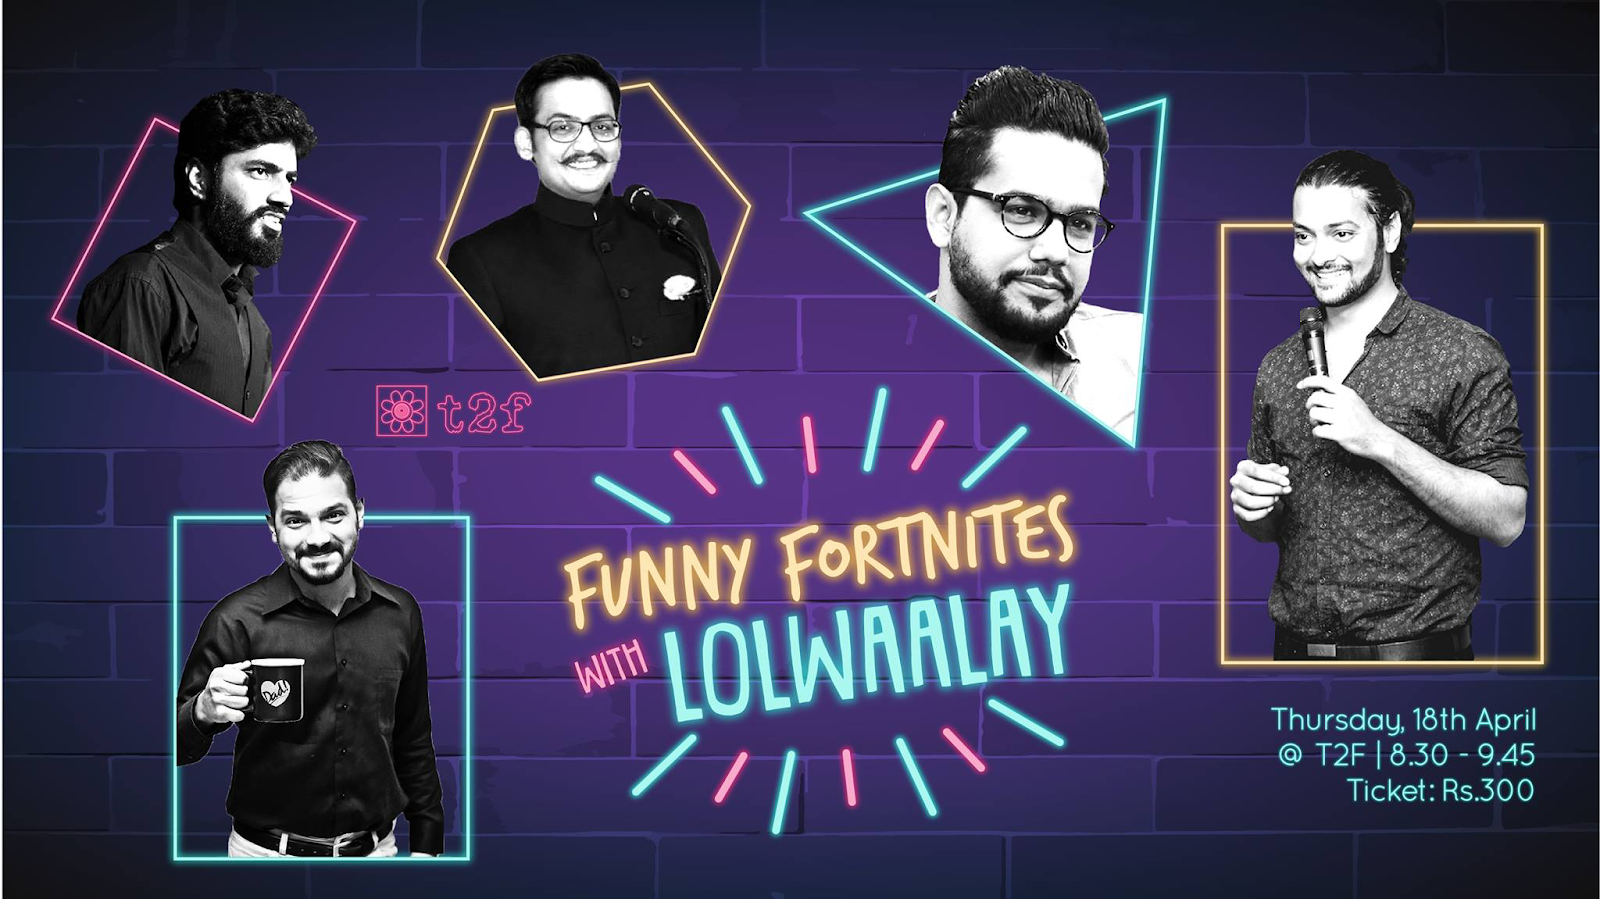 T2F Funny fortnites lolwaalay April 2019